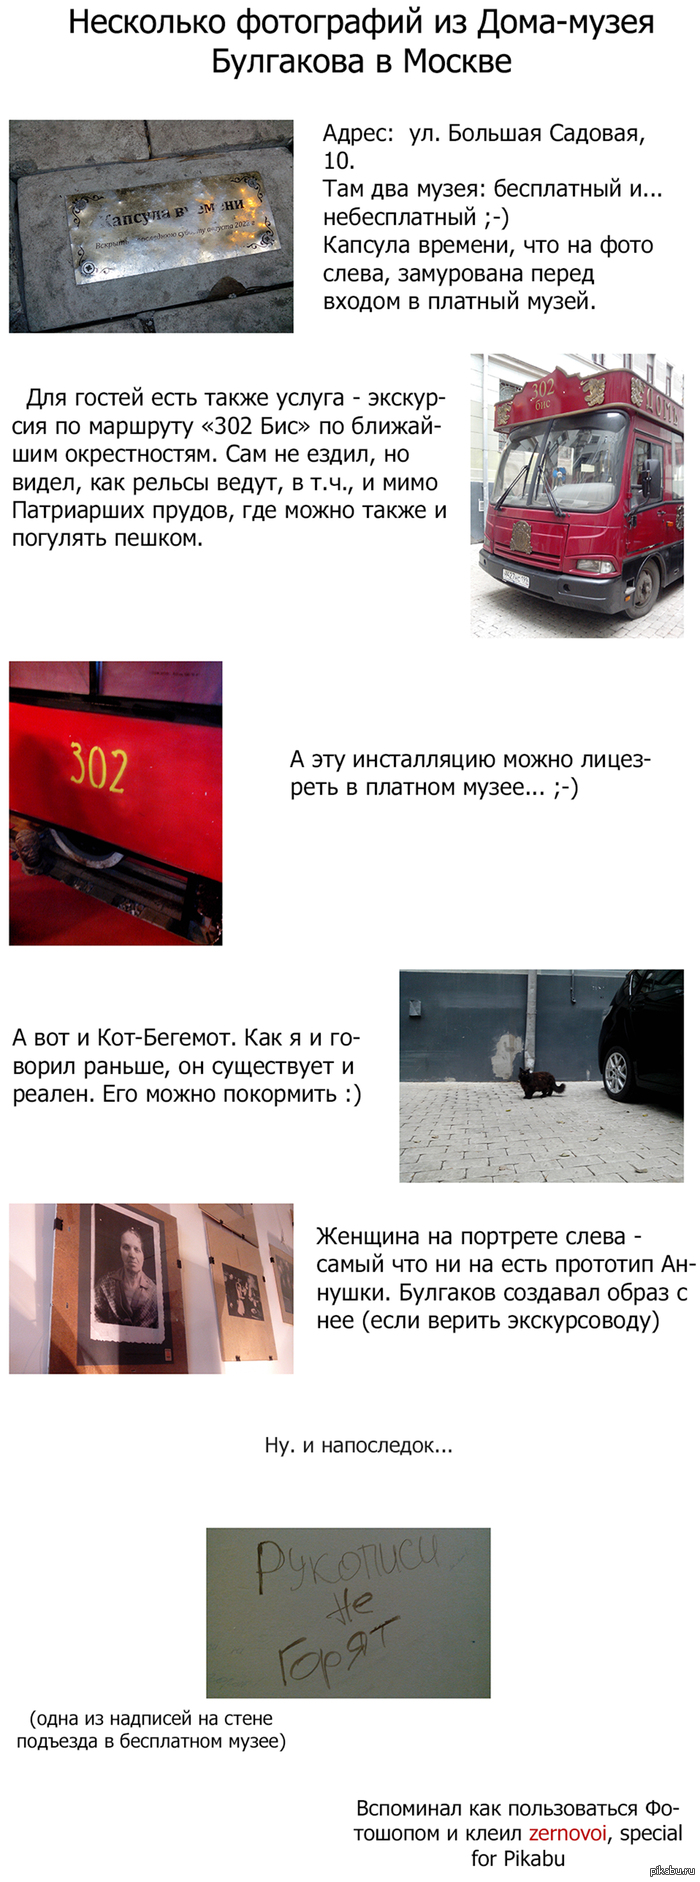     -  (  http://pikabu.ru/story/v_domemuzee_bulgakova_v_moskve_1092893)